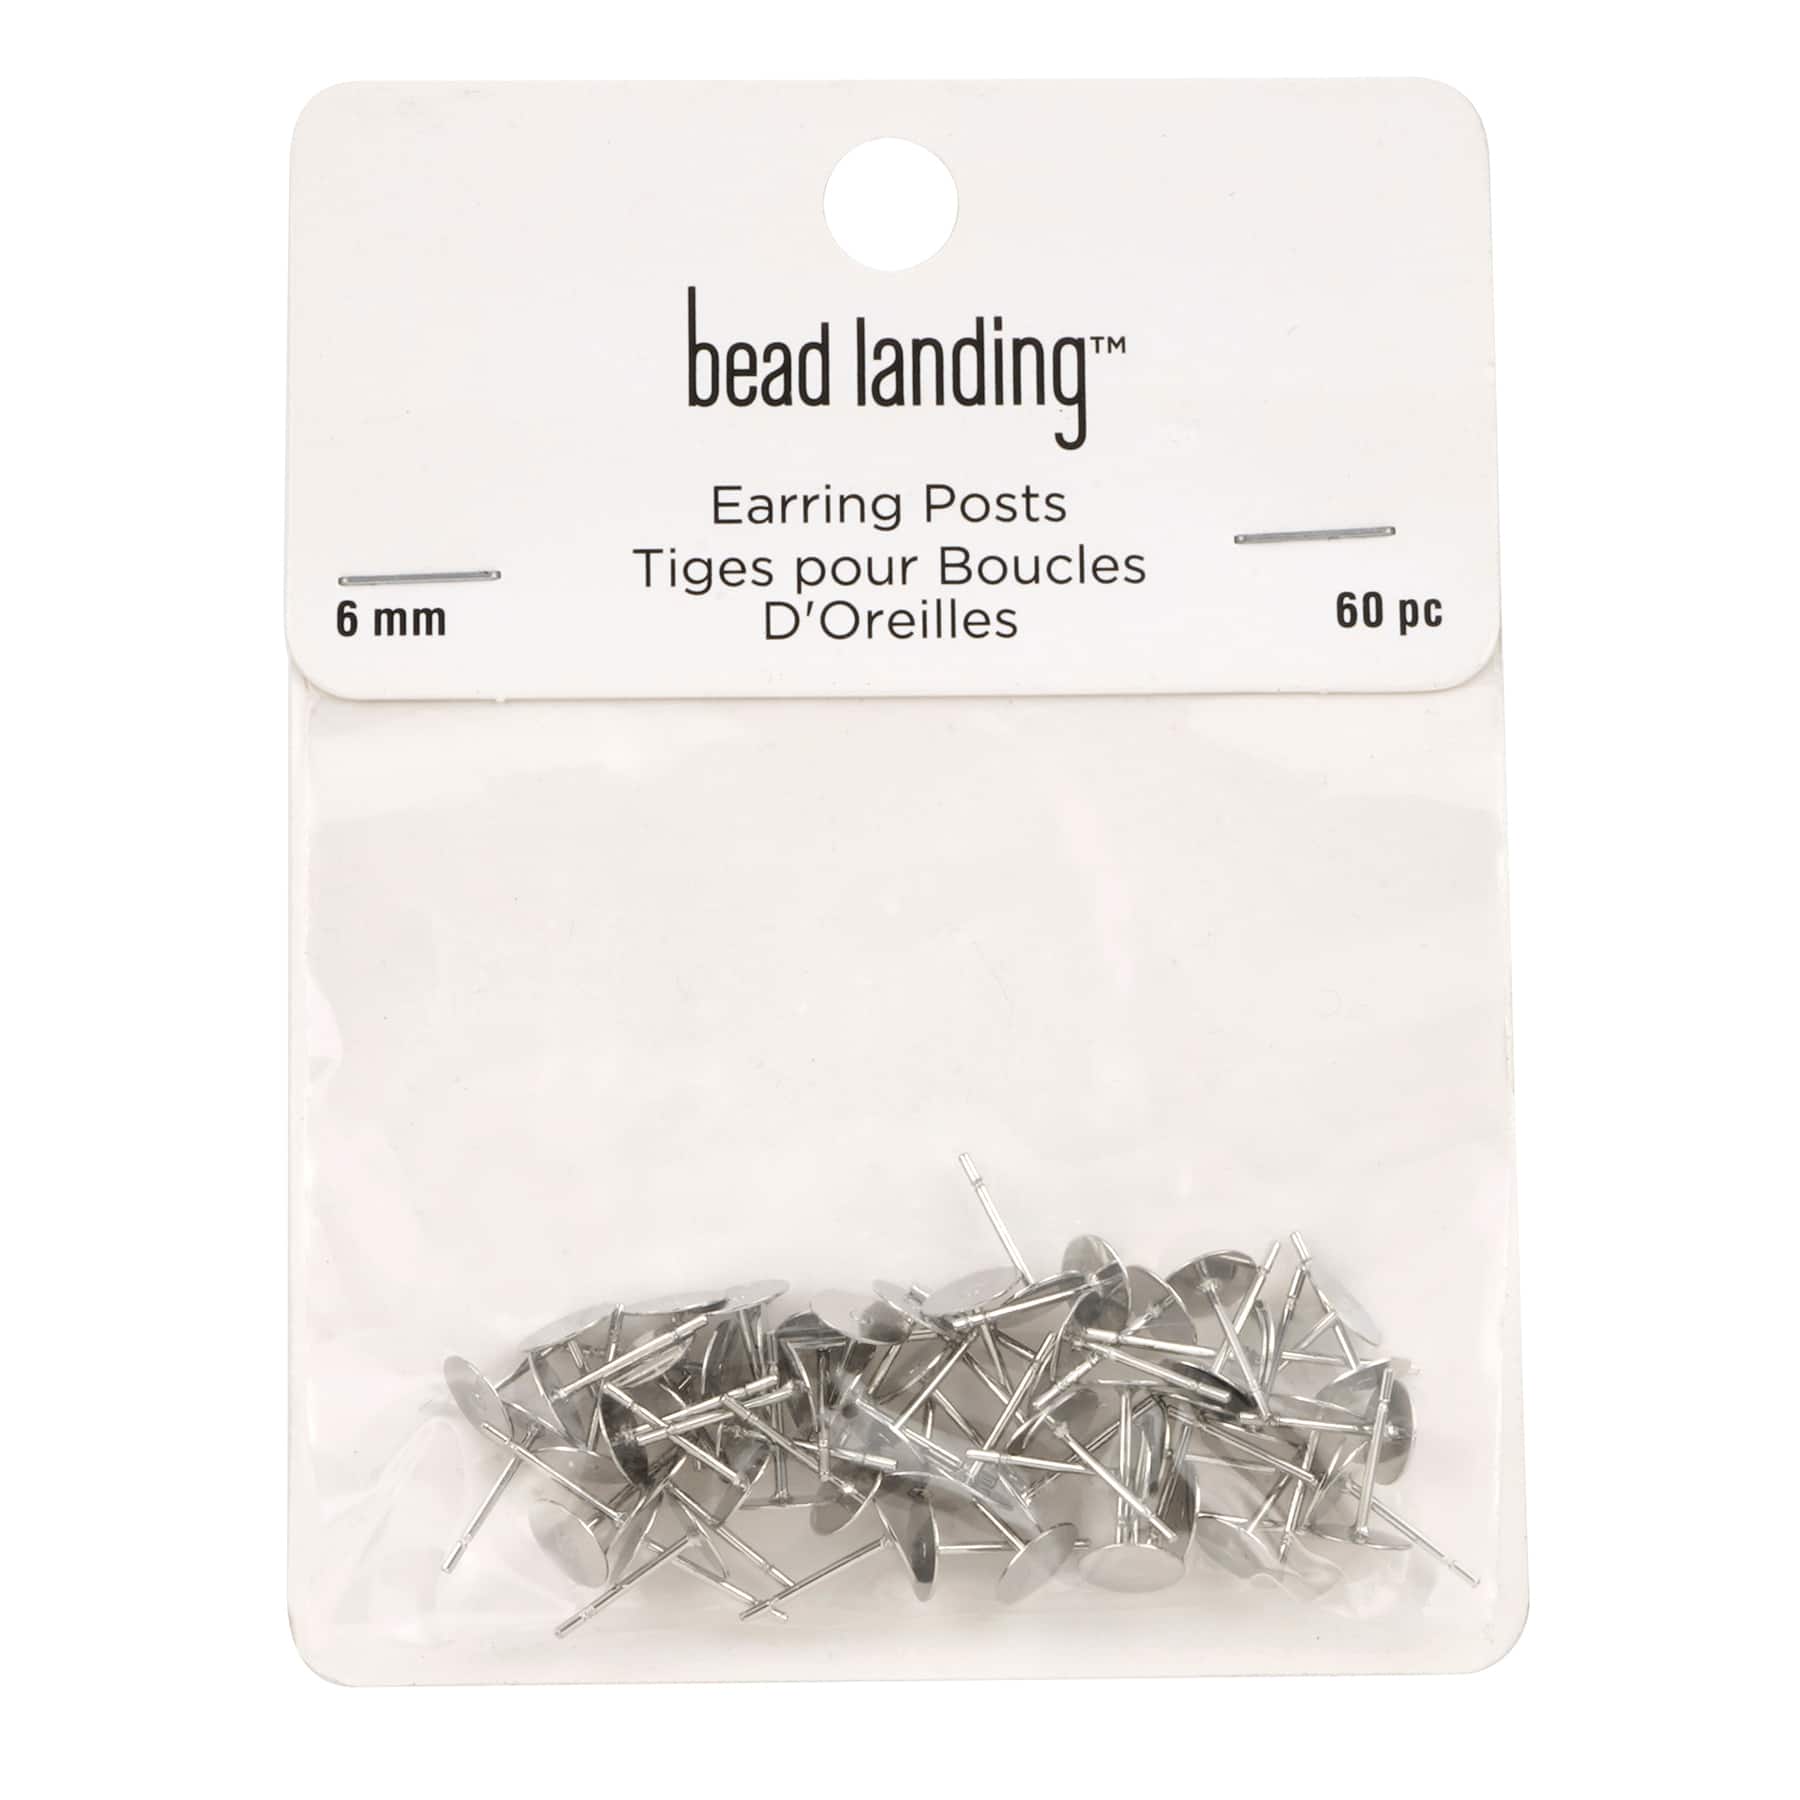 12 Packs: 60 ct. (720 total) Flat Earring Posts by Bead Landing&#x2122;